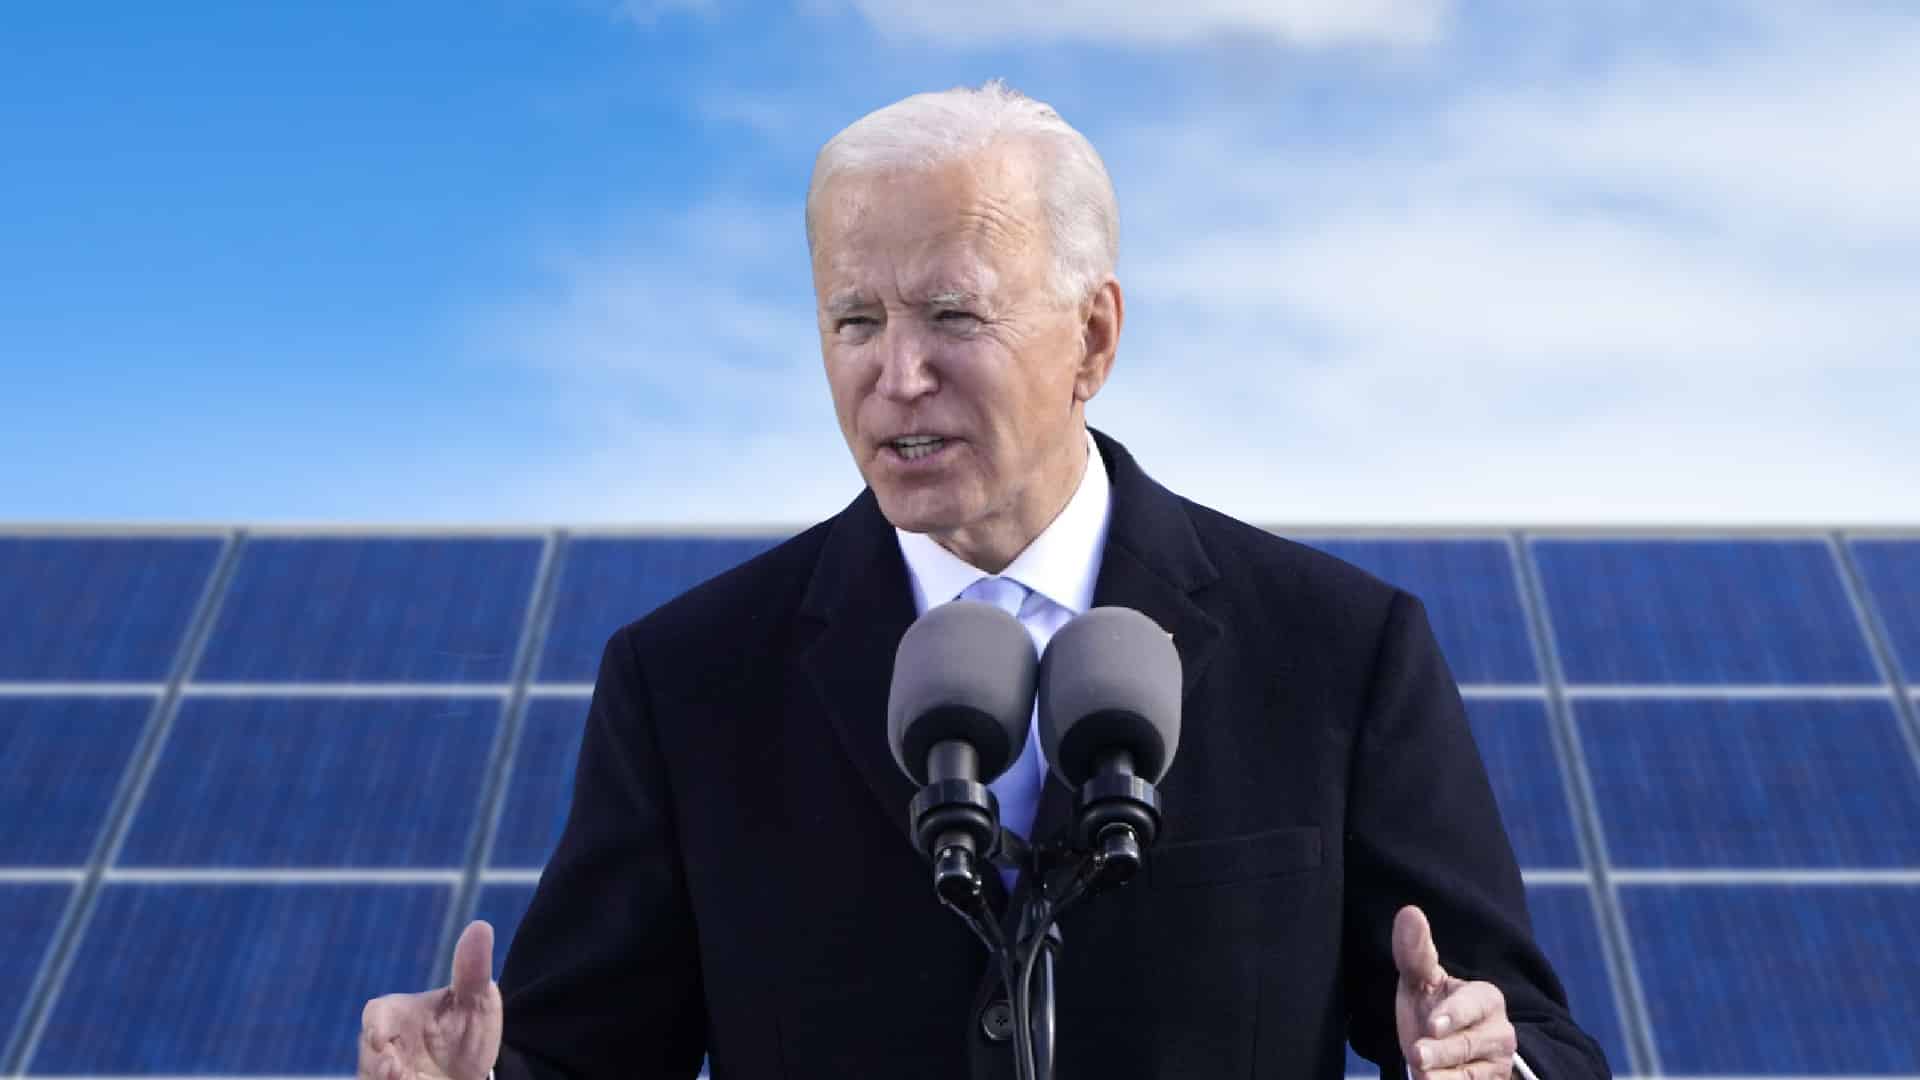 Biden Administration solar